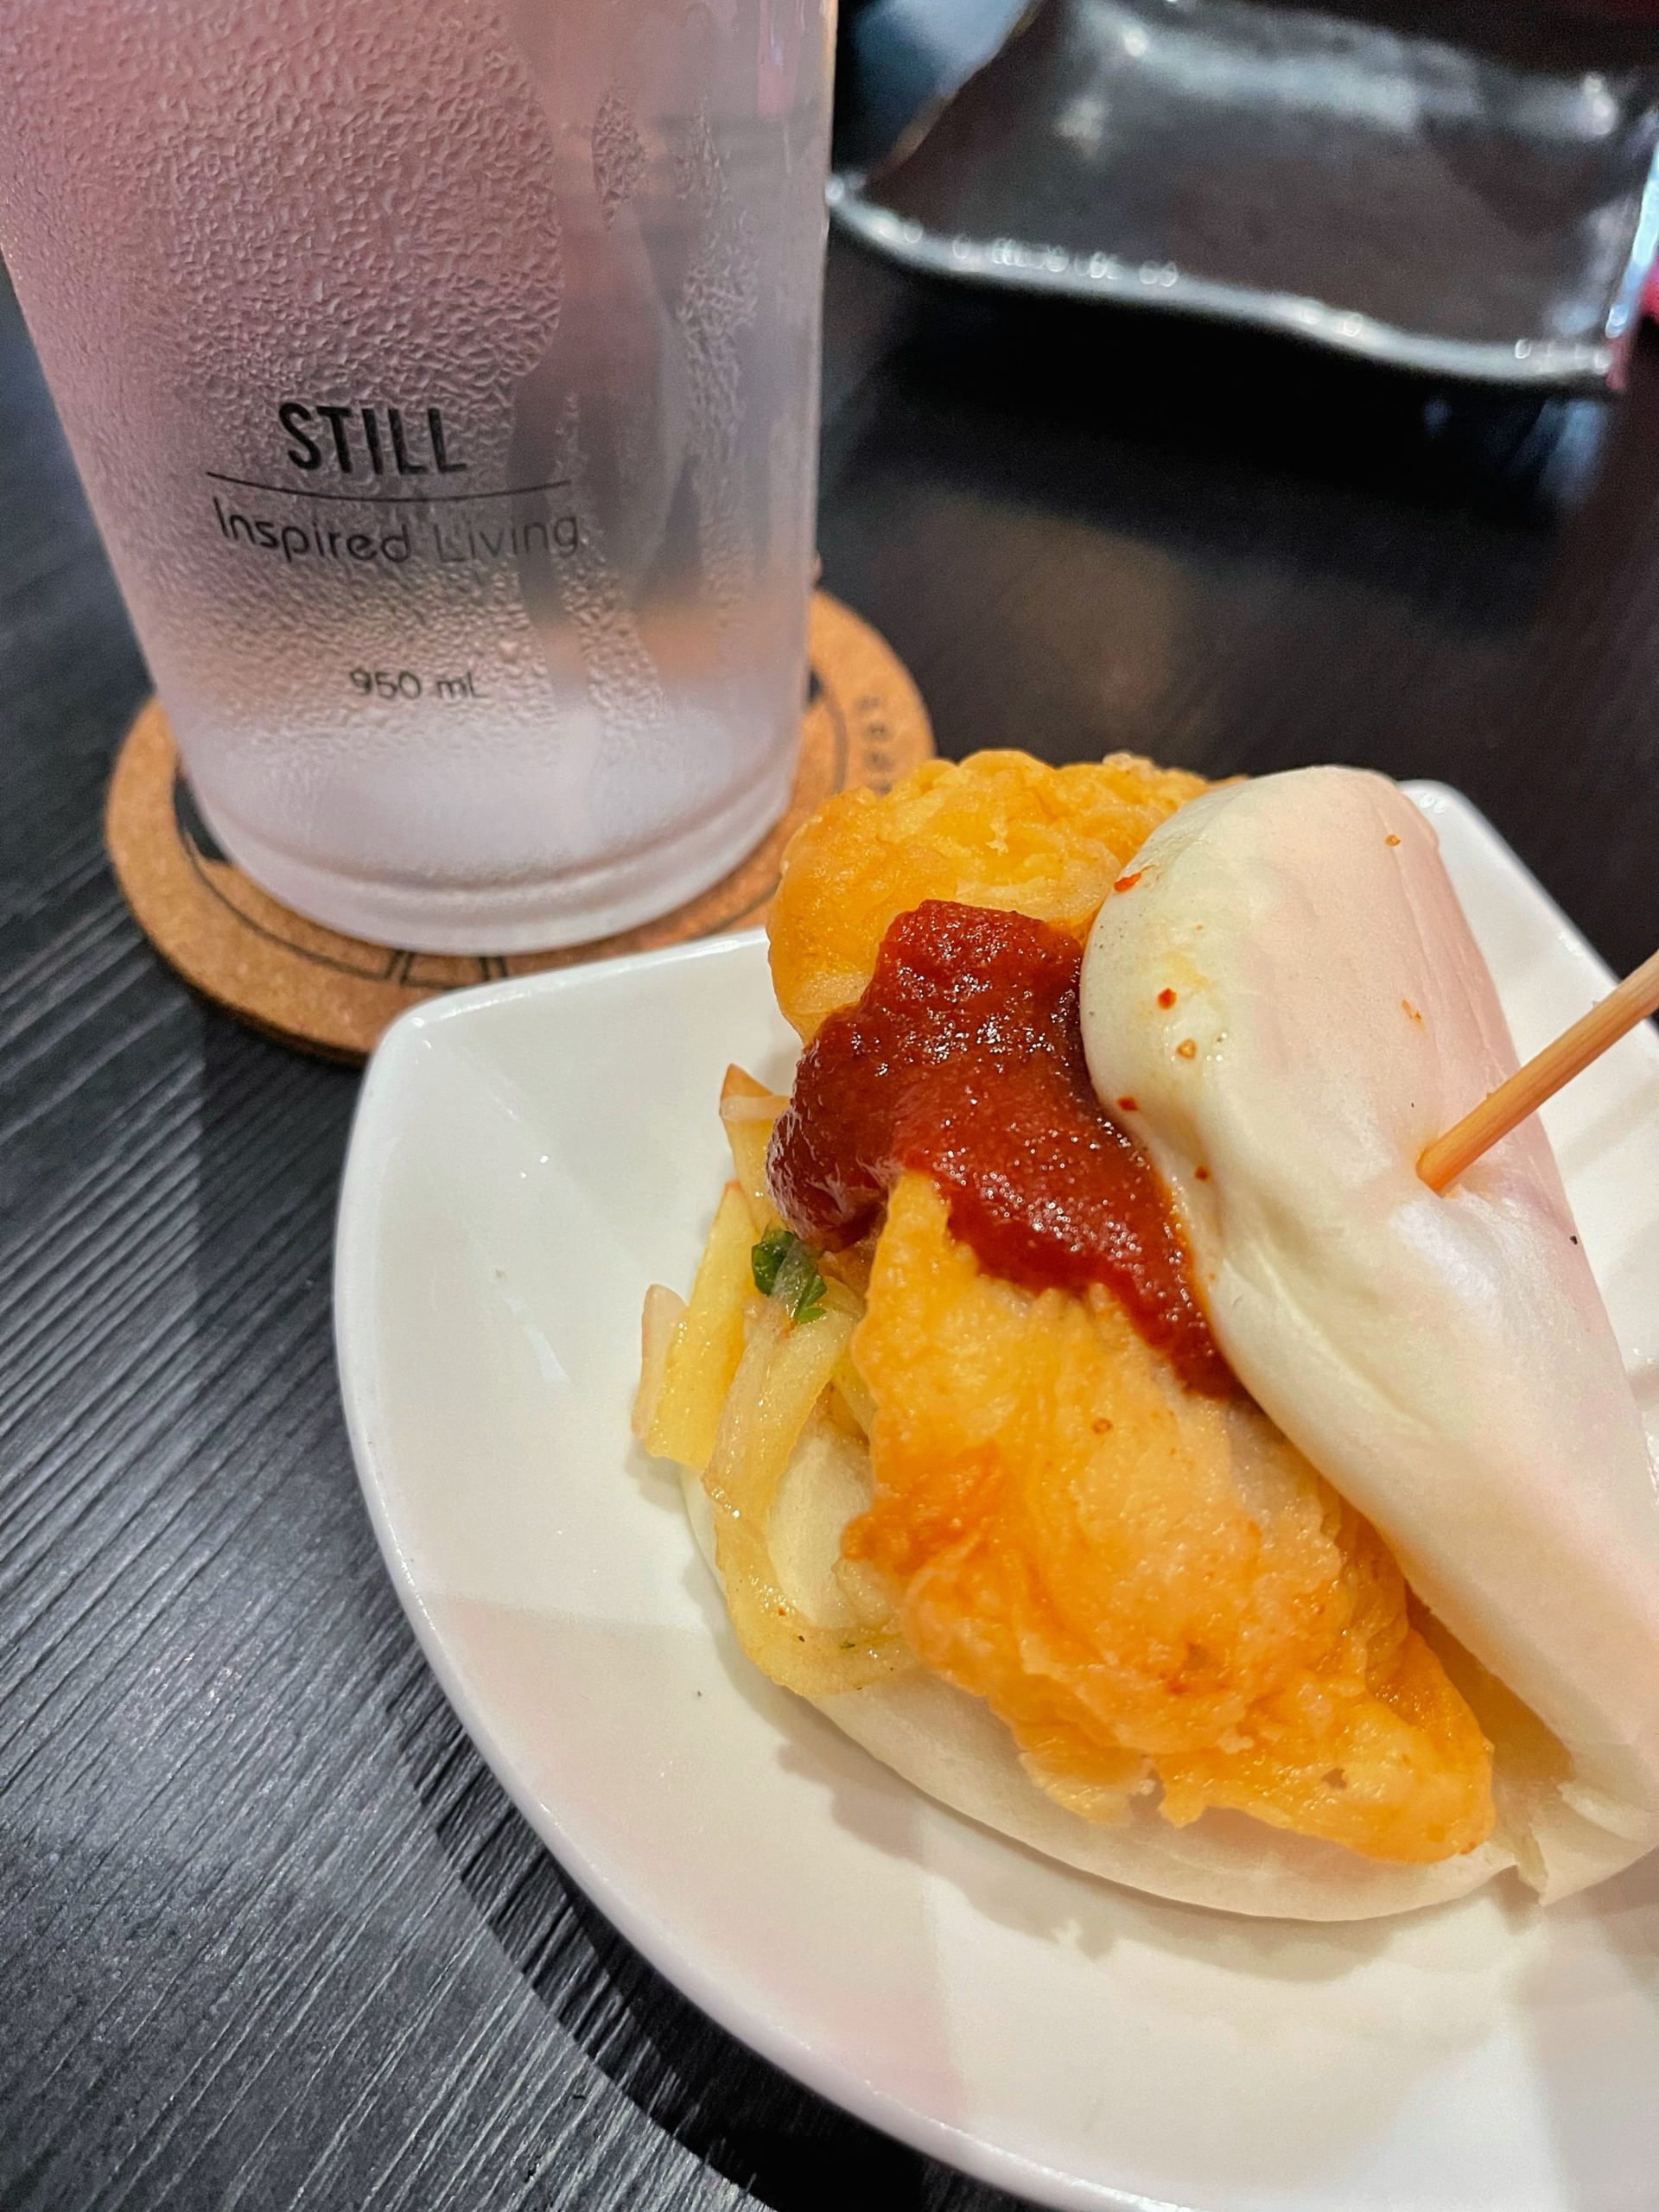 Sushi Pop